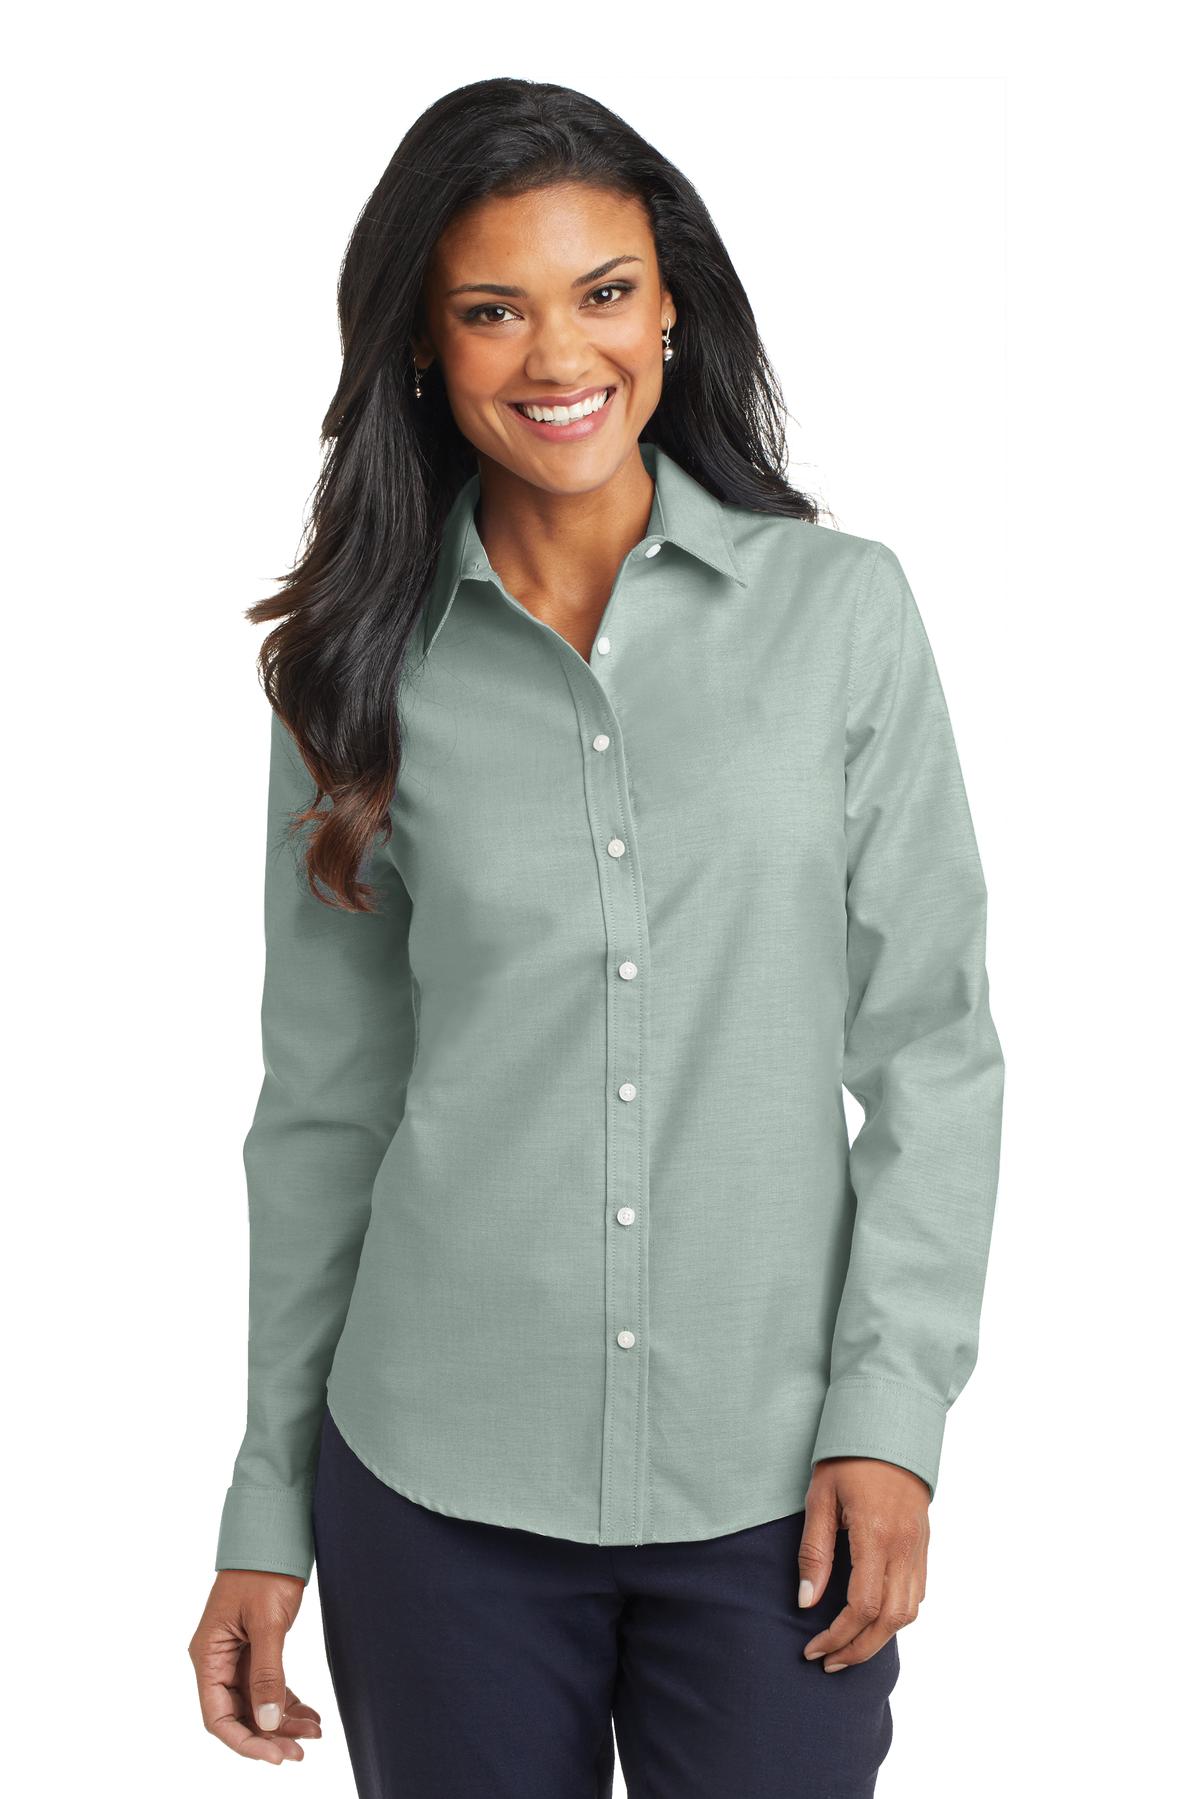 Port Authority® Ladies SuperPro™ Oxford Shirt. L658 - DFW Impression